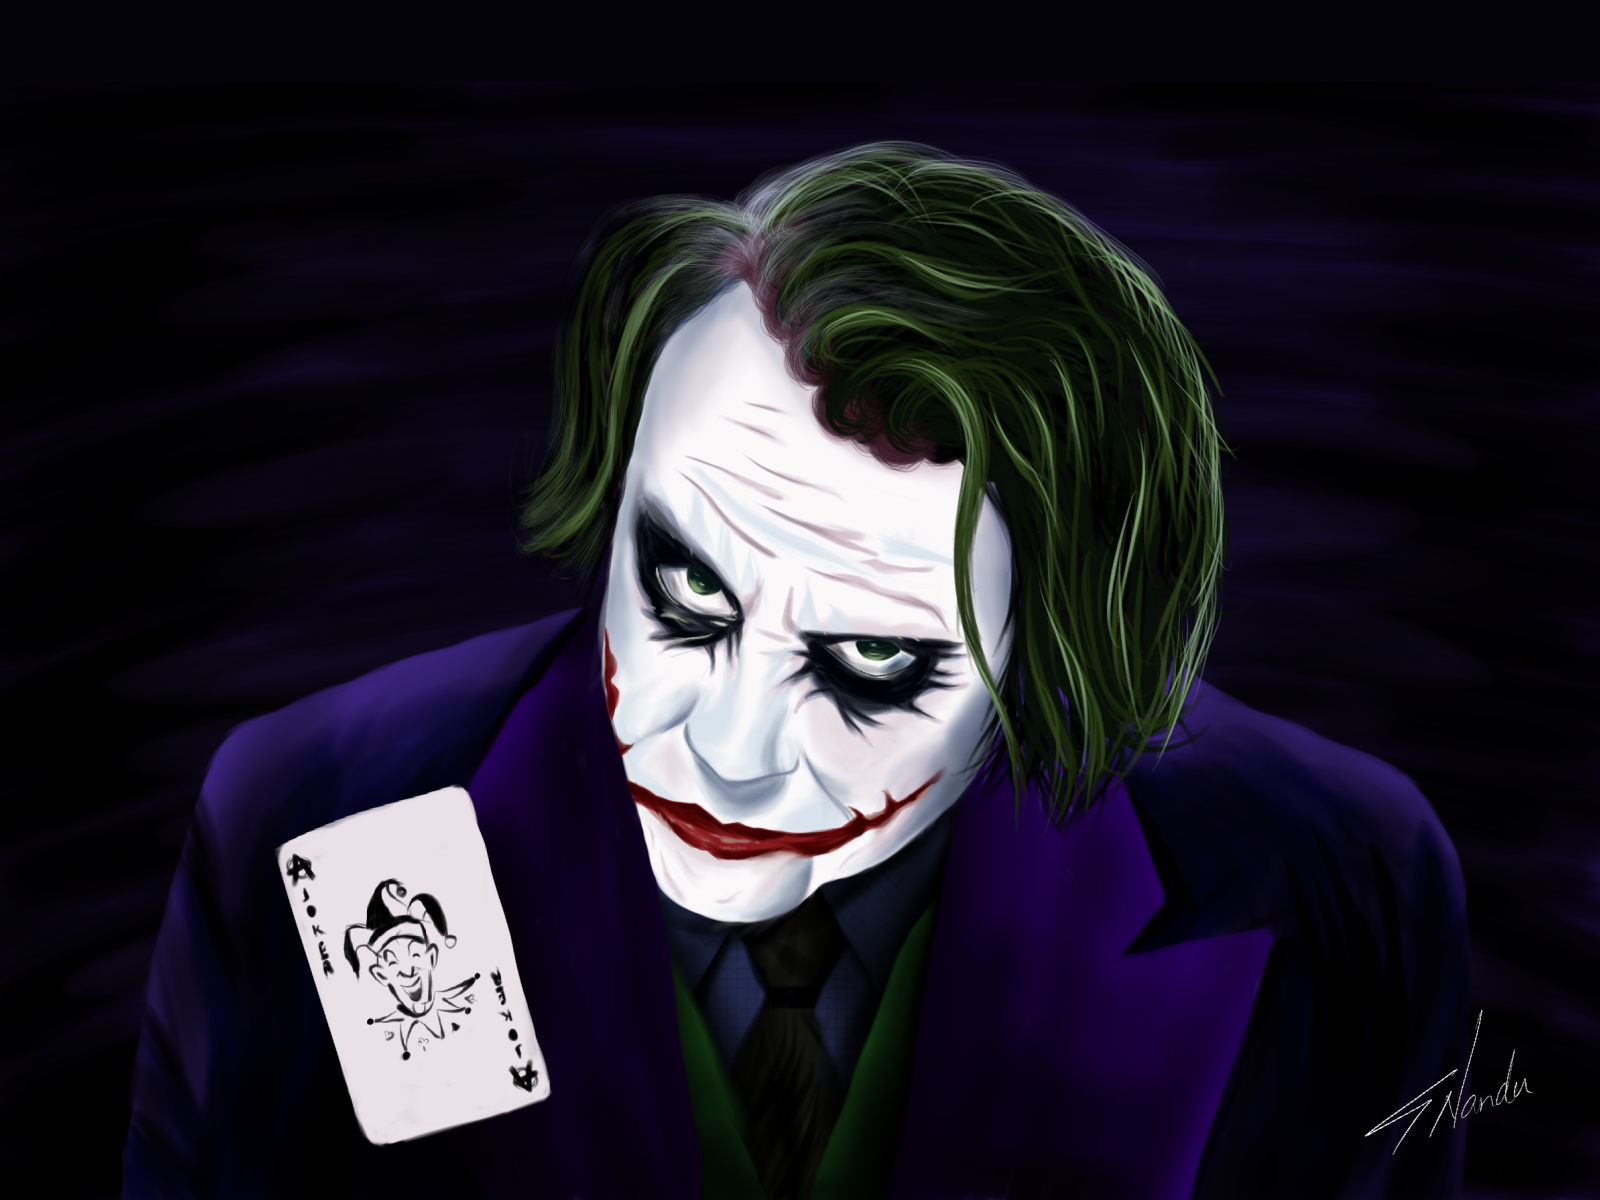 Joker by Nanda Kishore Goli on Dribbble